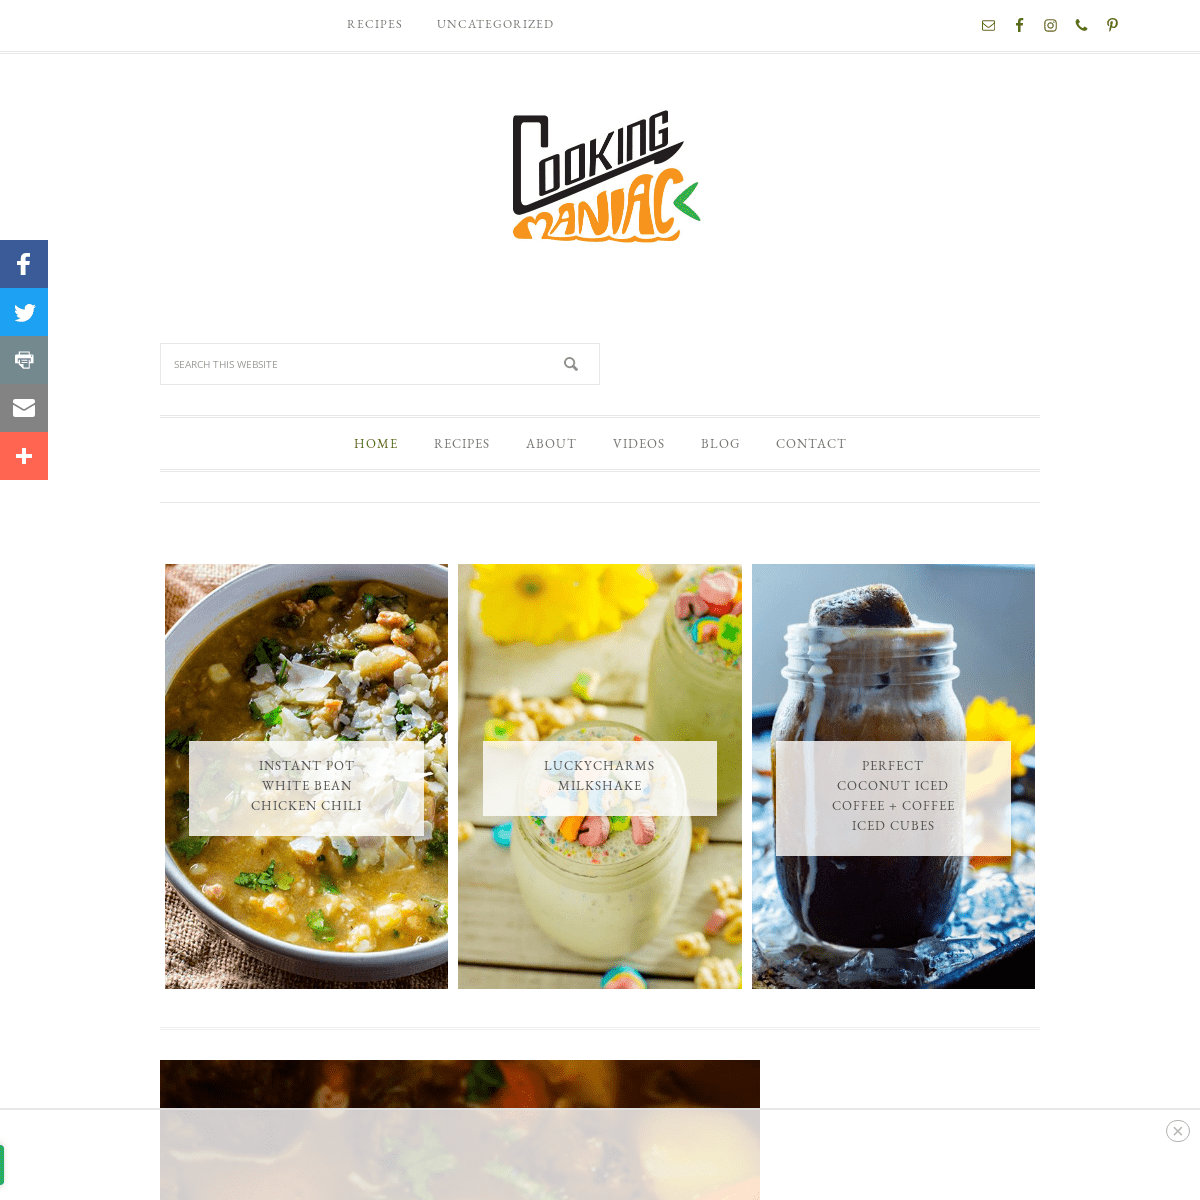 A complete backup of cookingmaniac.com